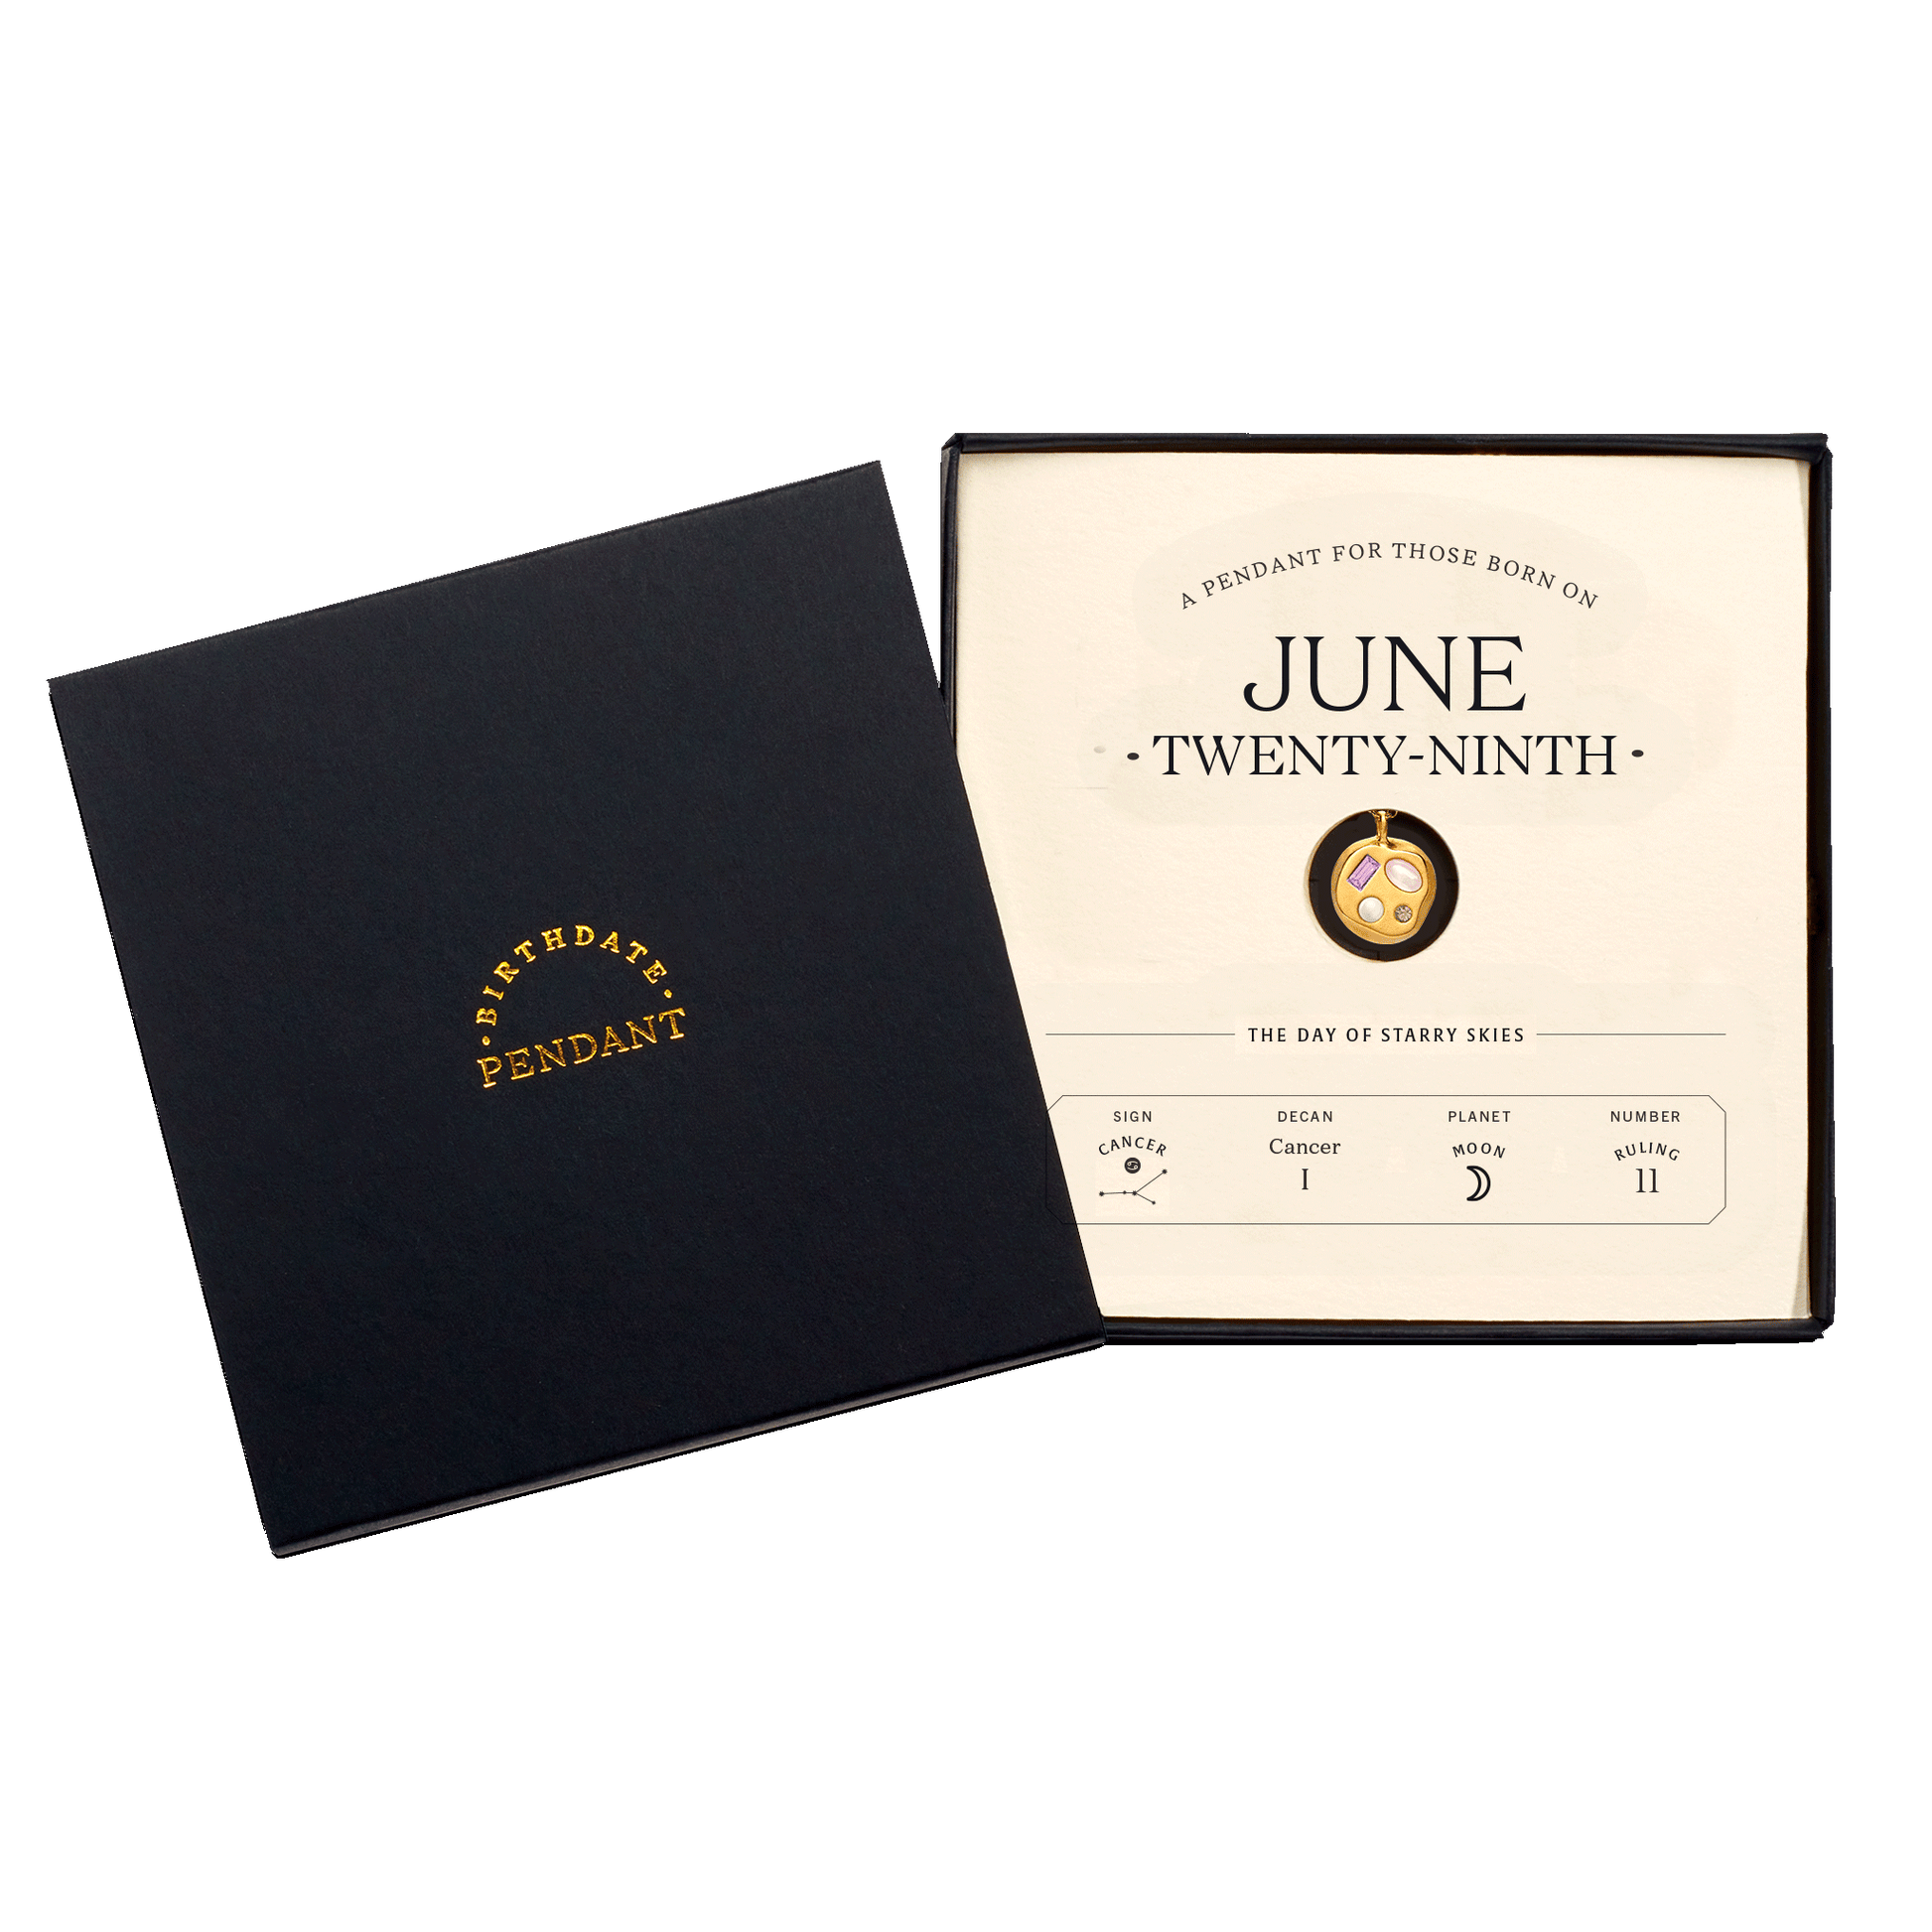 The June Twenty-Ninth Pendant inside its box